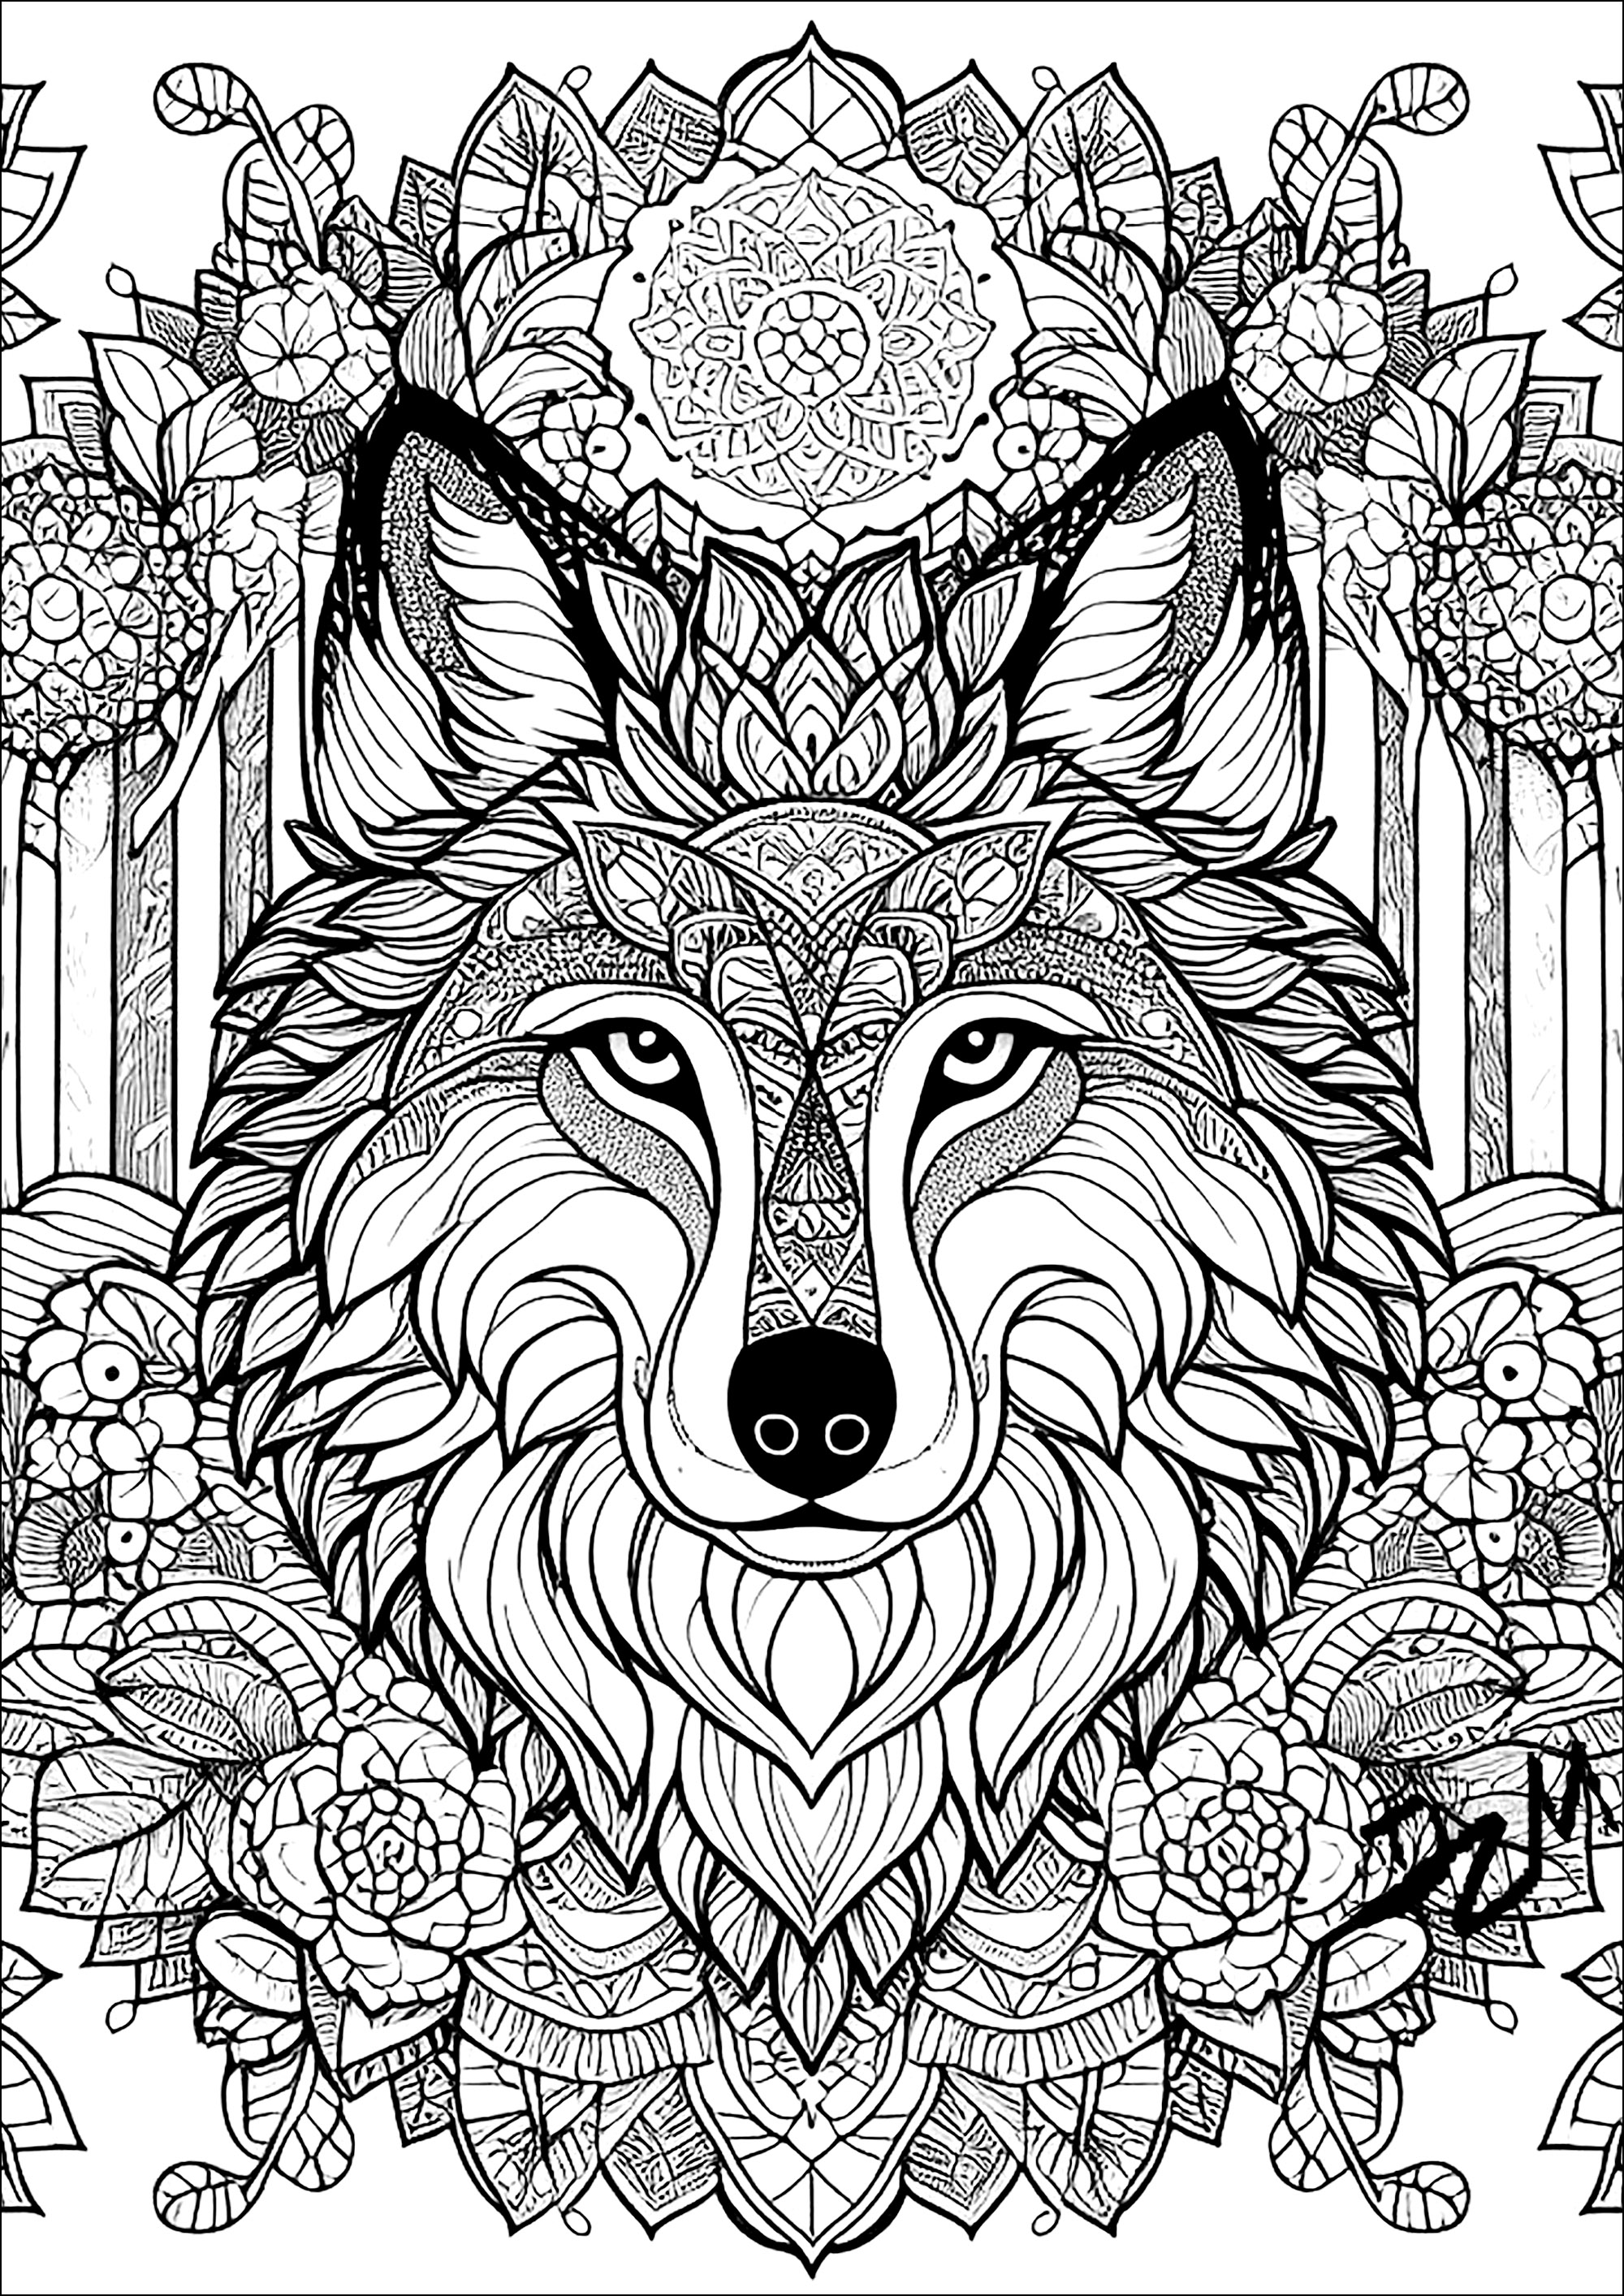 O lobo e as mandalas, Artista : Domandalas